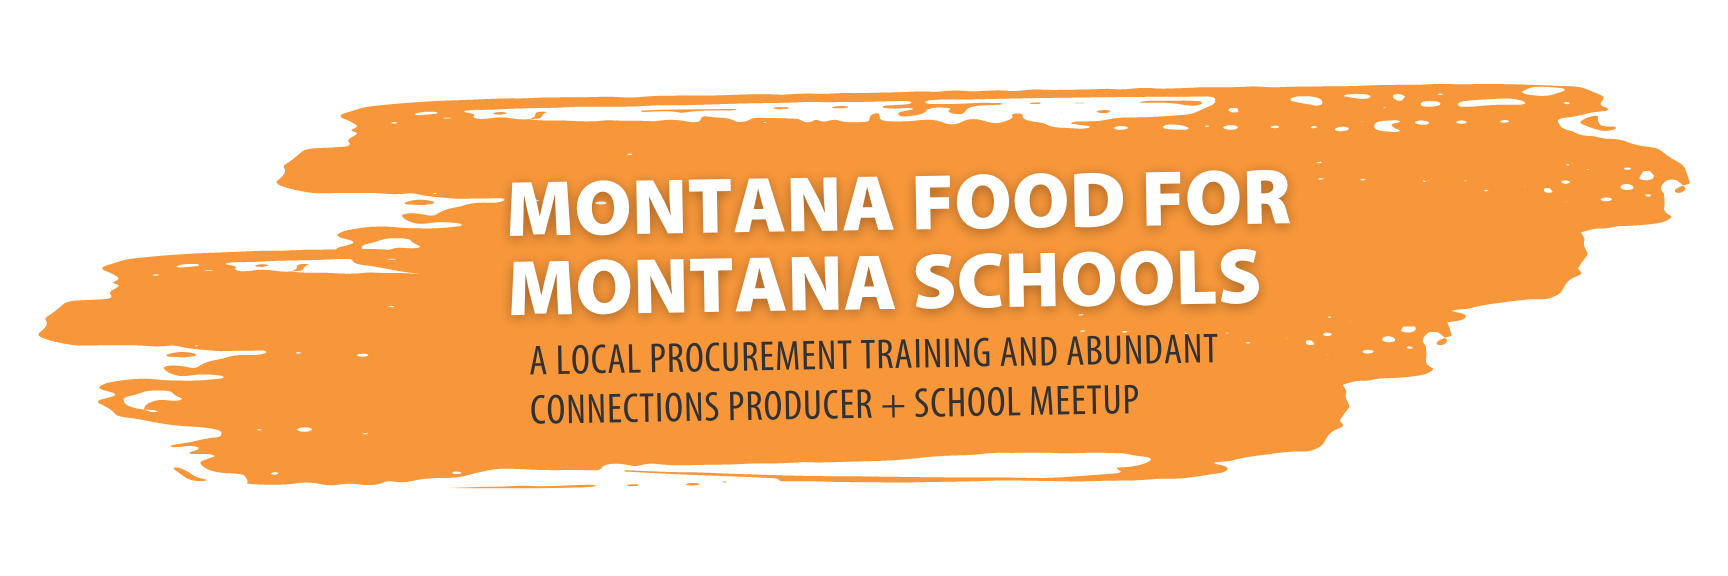 Montana Food for Montana Schools logo